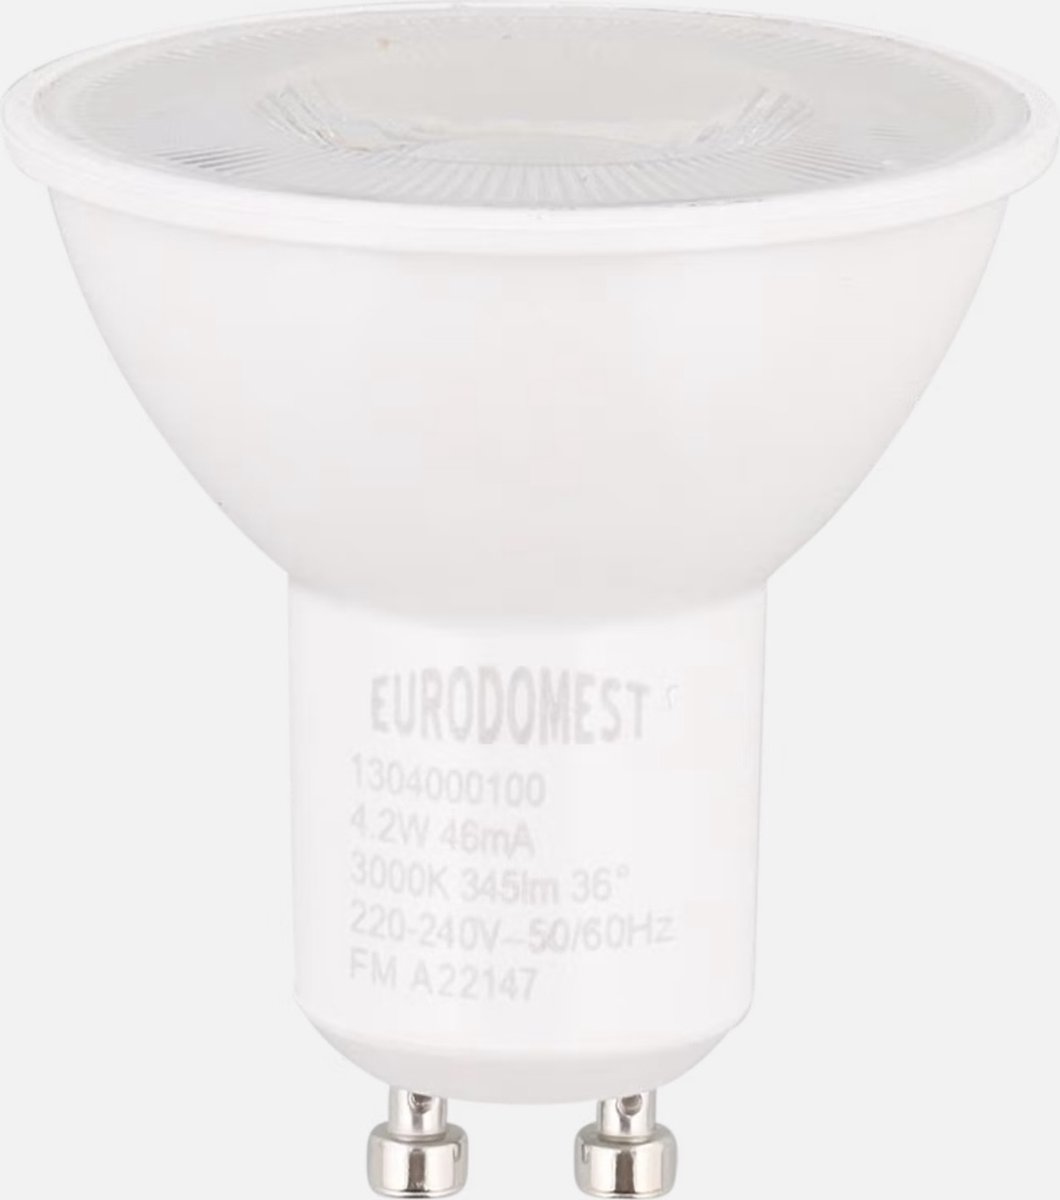 Eurodomest ledspot 4,2 watt | 345 lumen | 12-pack | bol.com